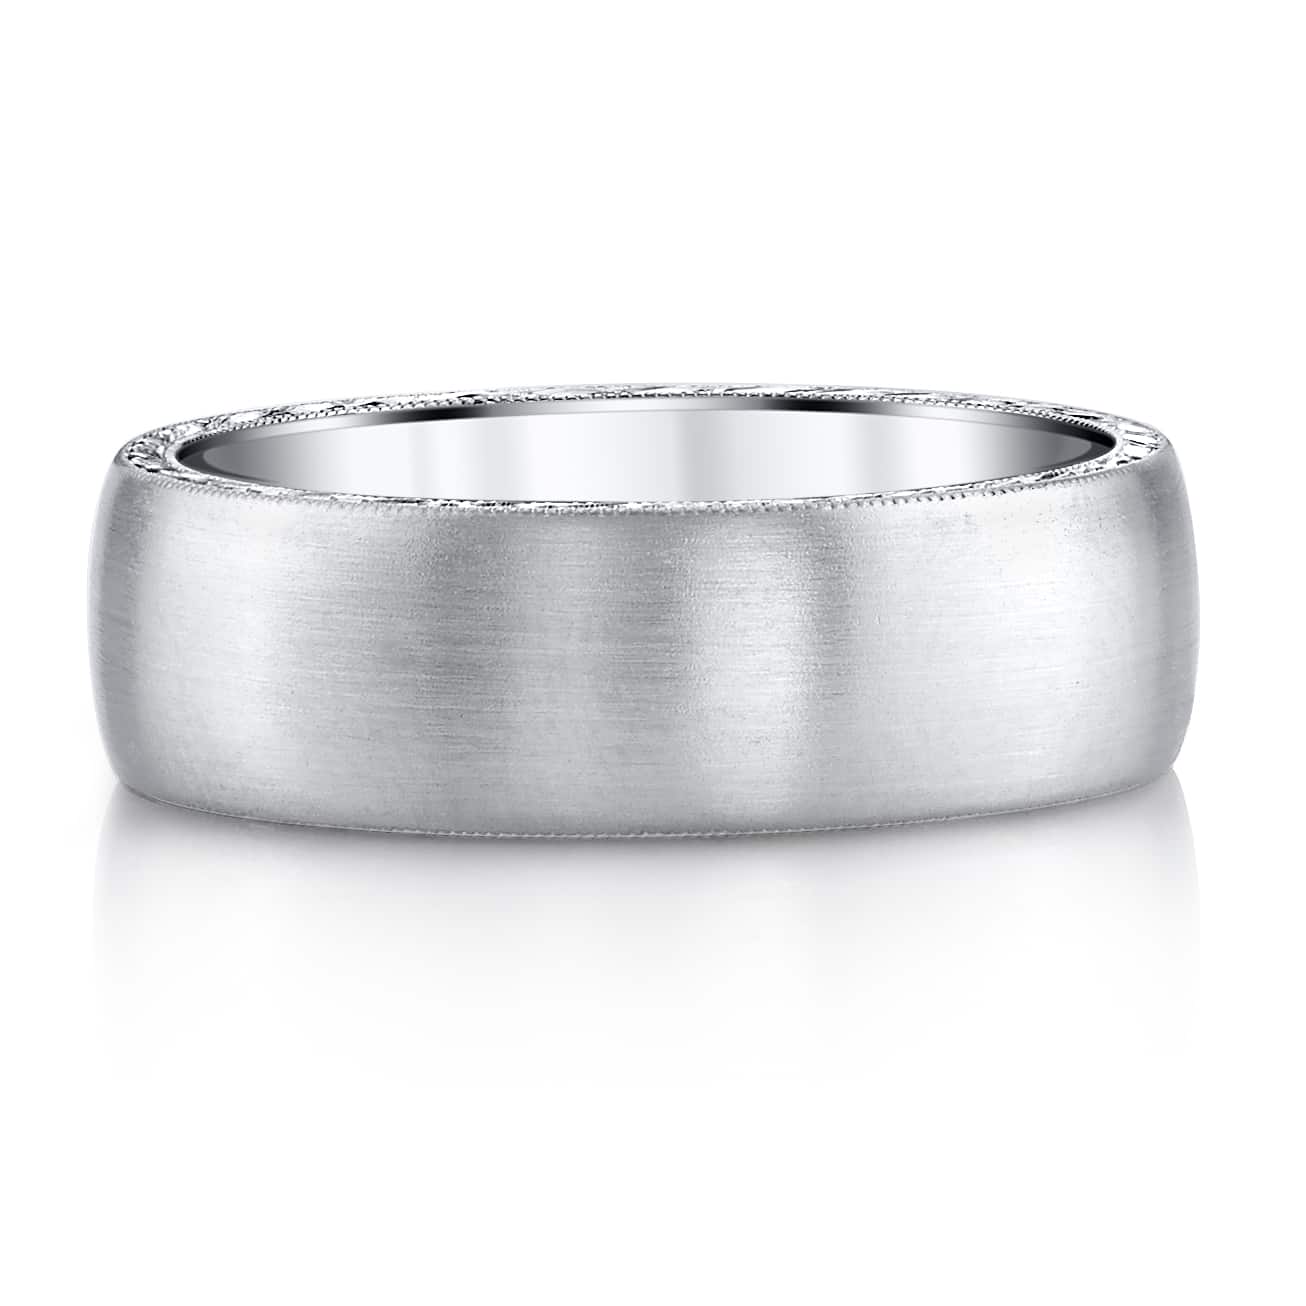 Dean Fredrick's custom ring